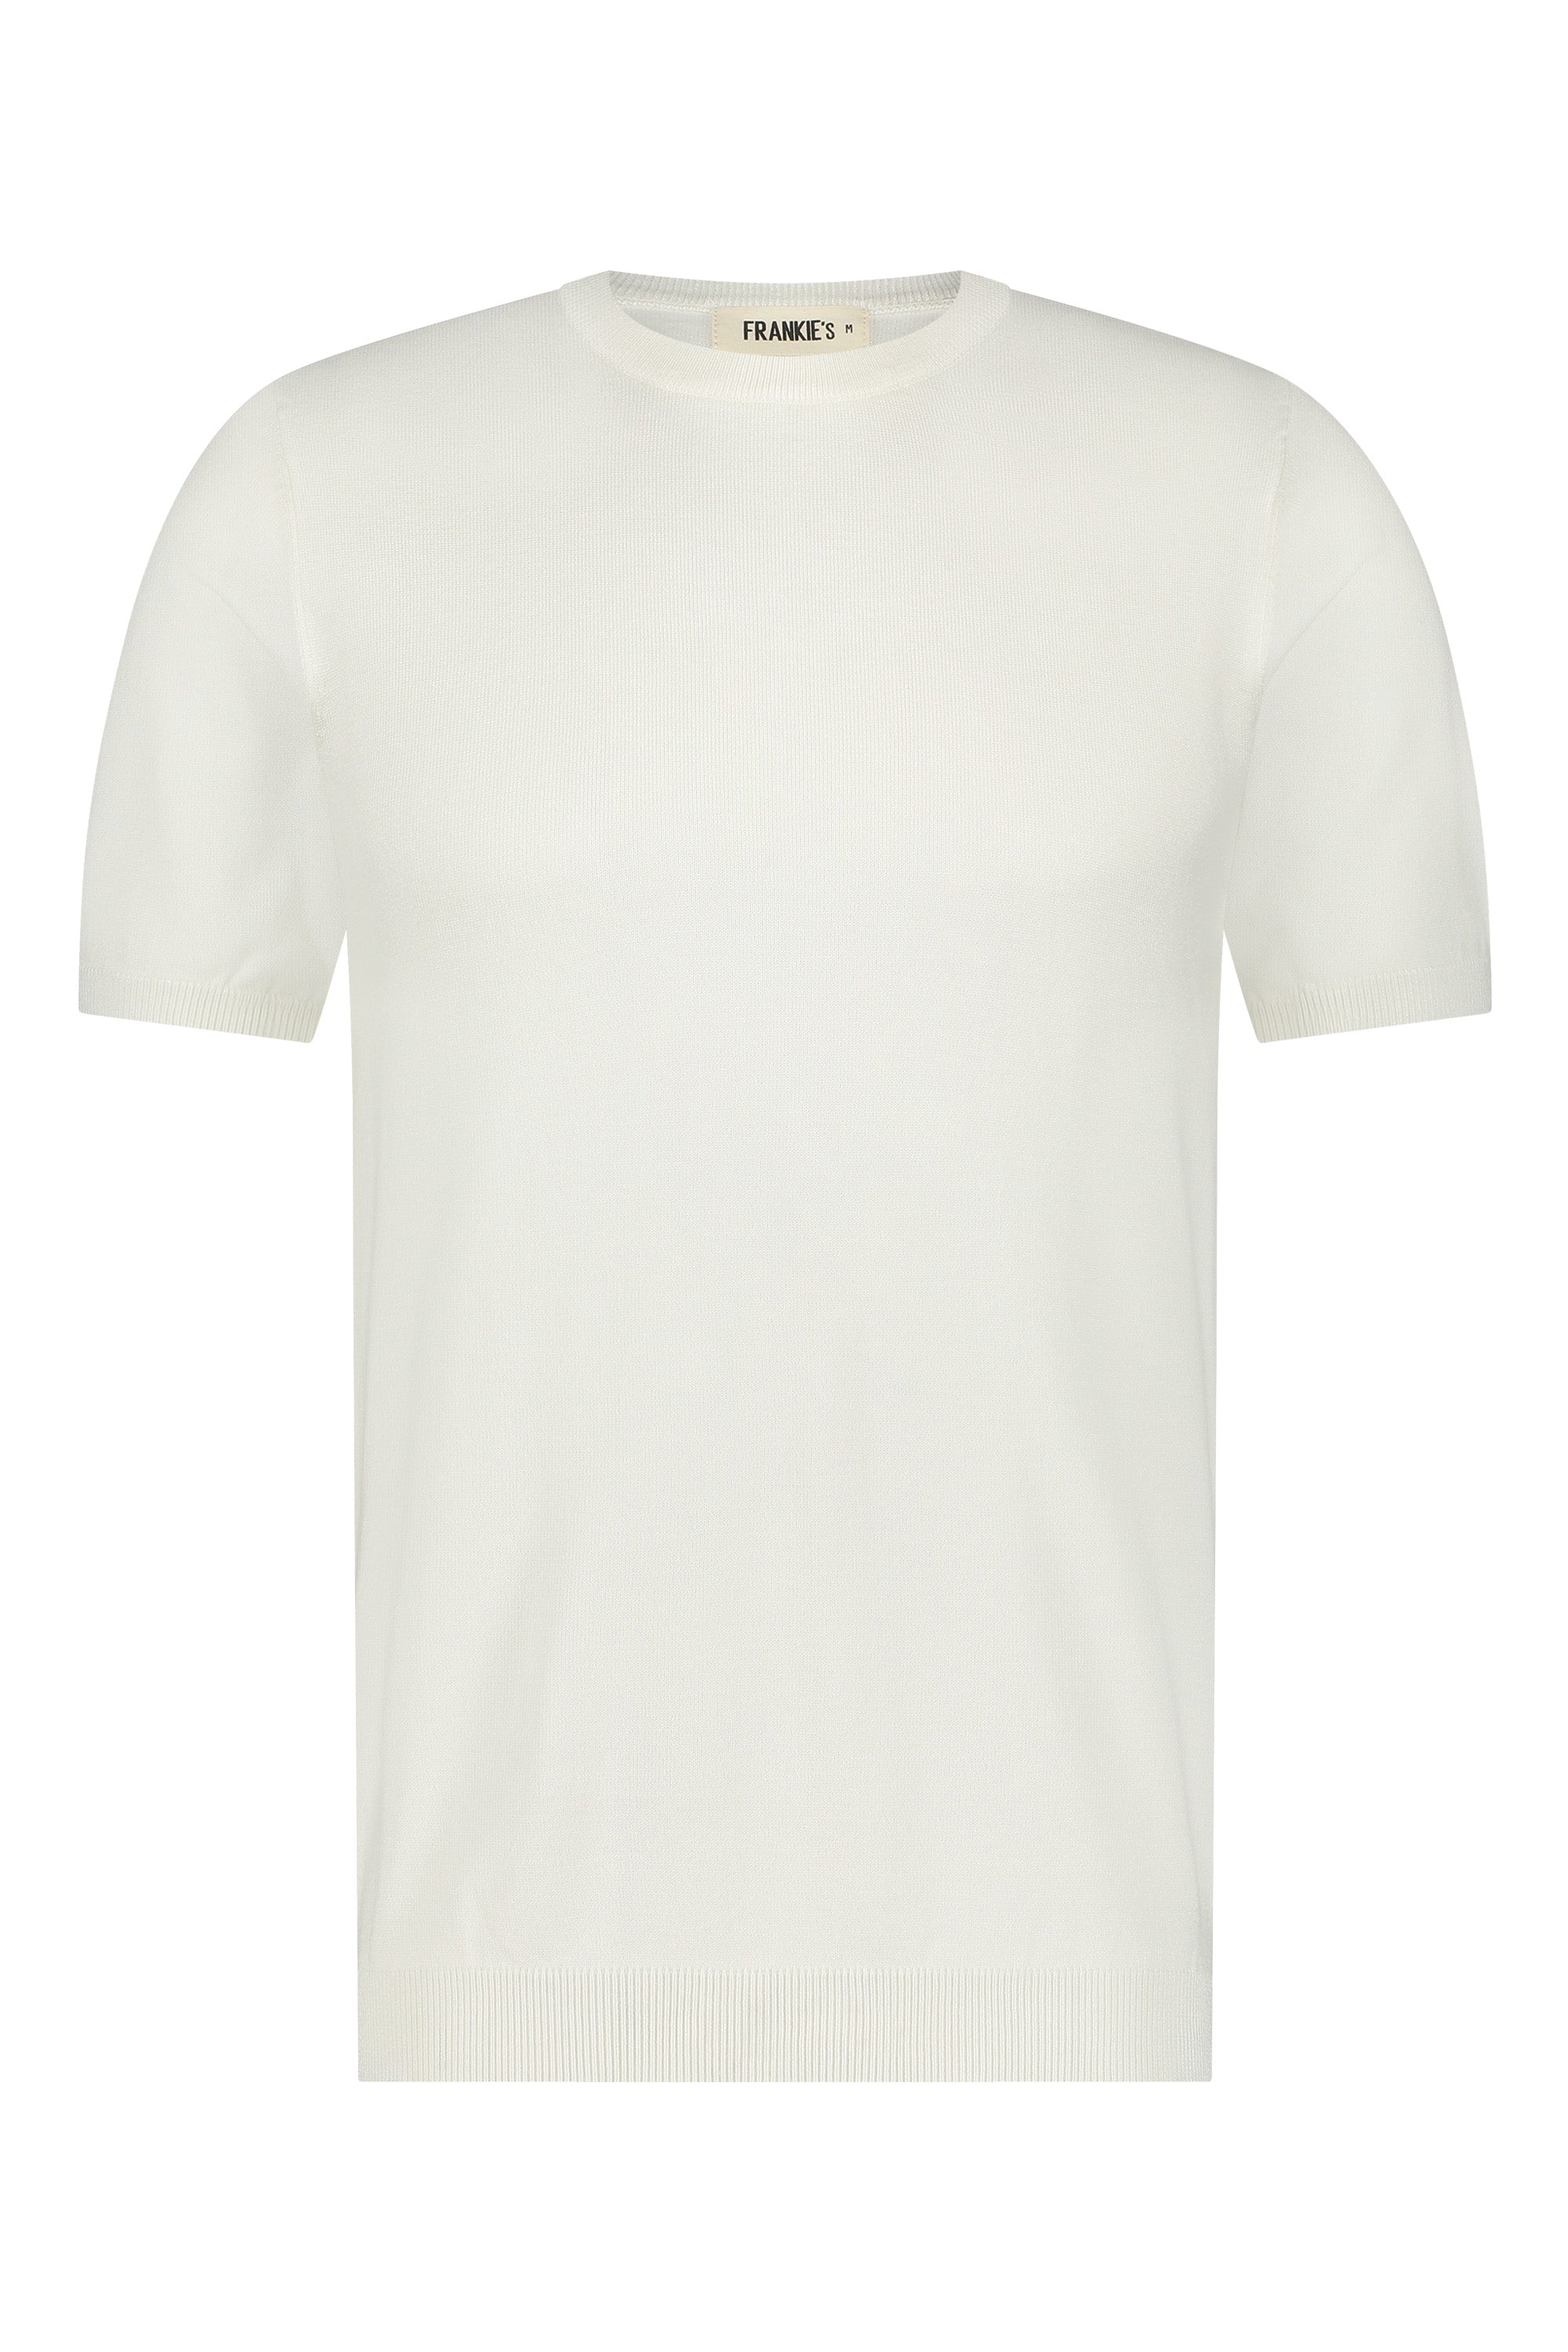 T-shirt knitwear short sleeve white